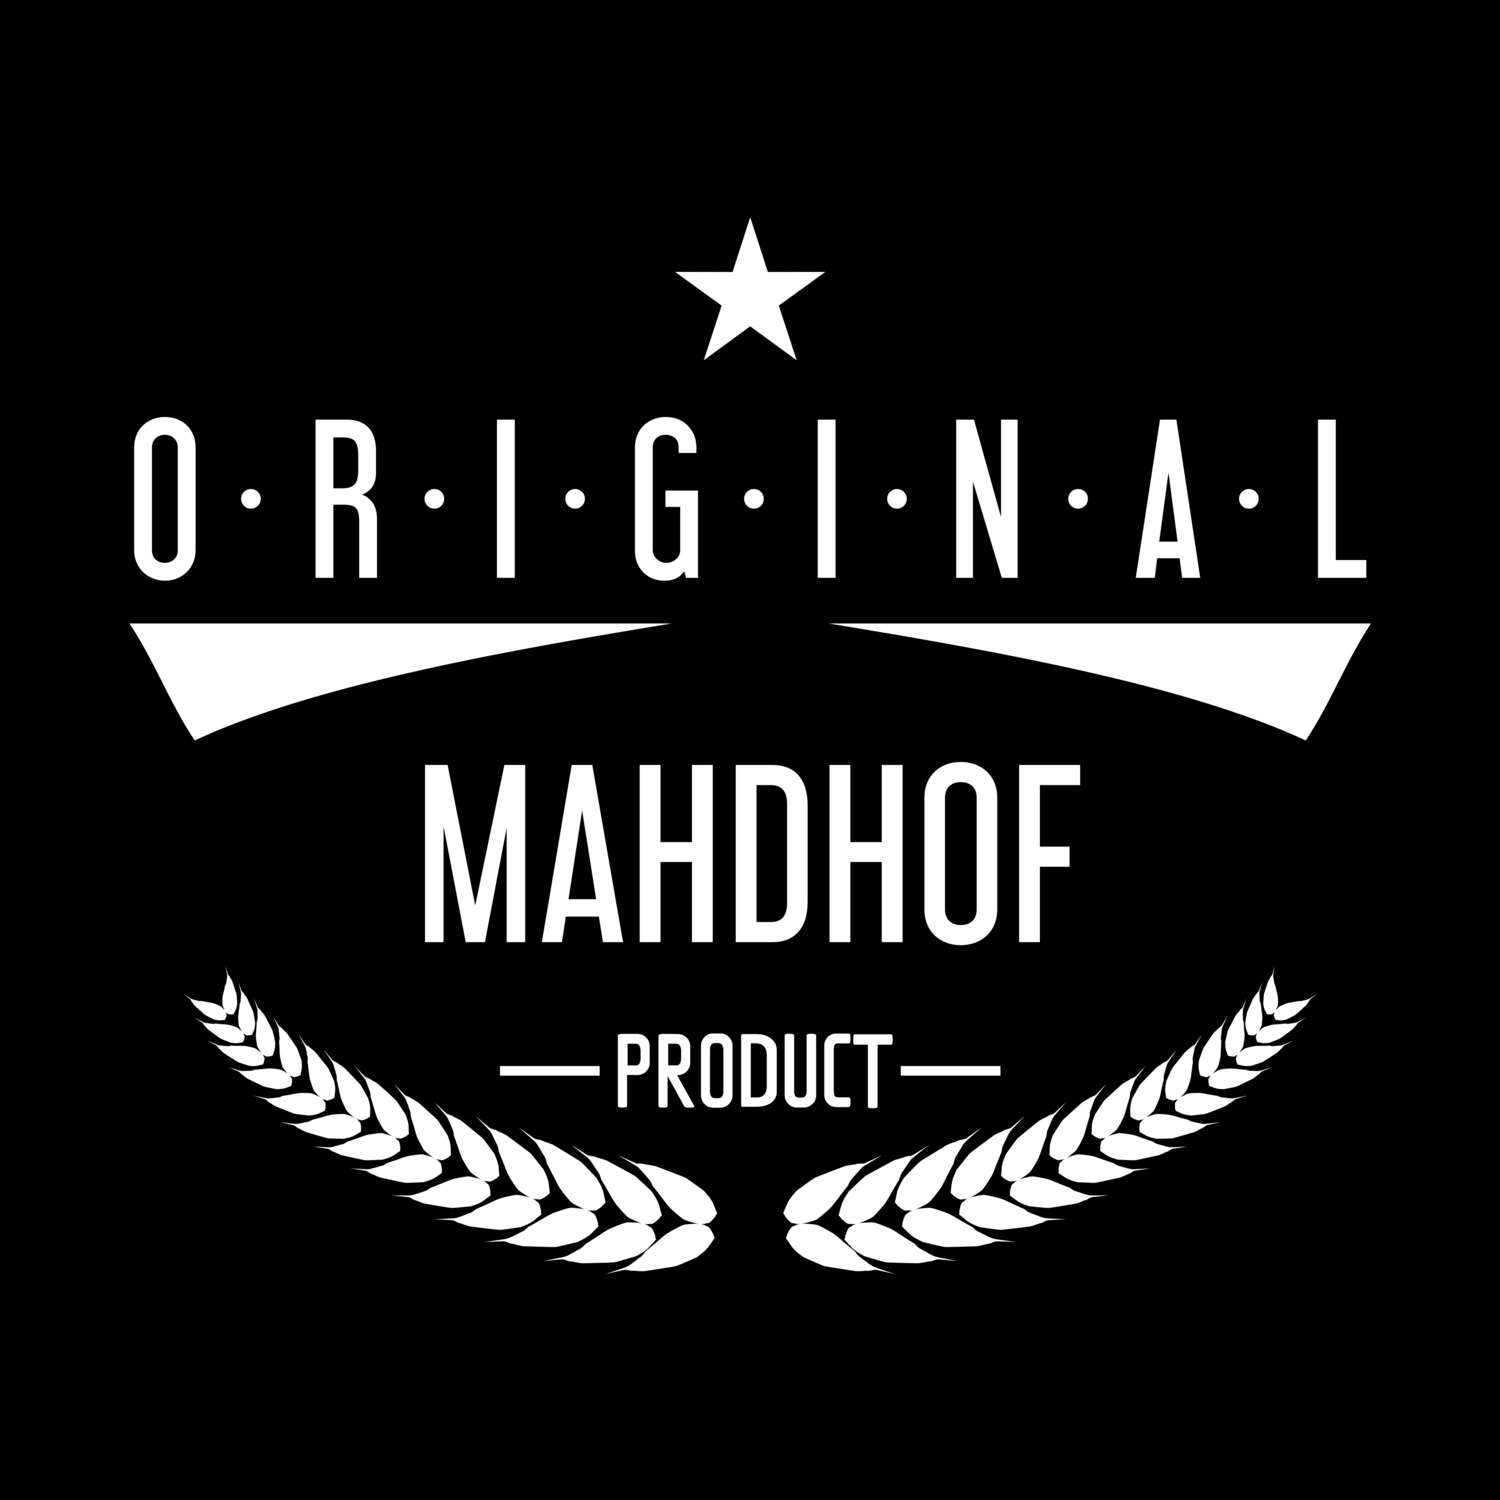 Mahdhof T-Shirt »Original Product«